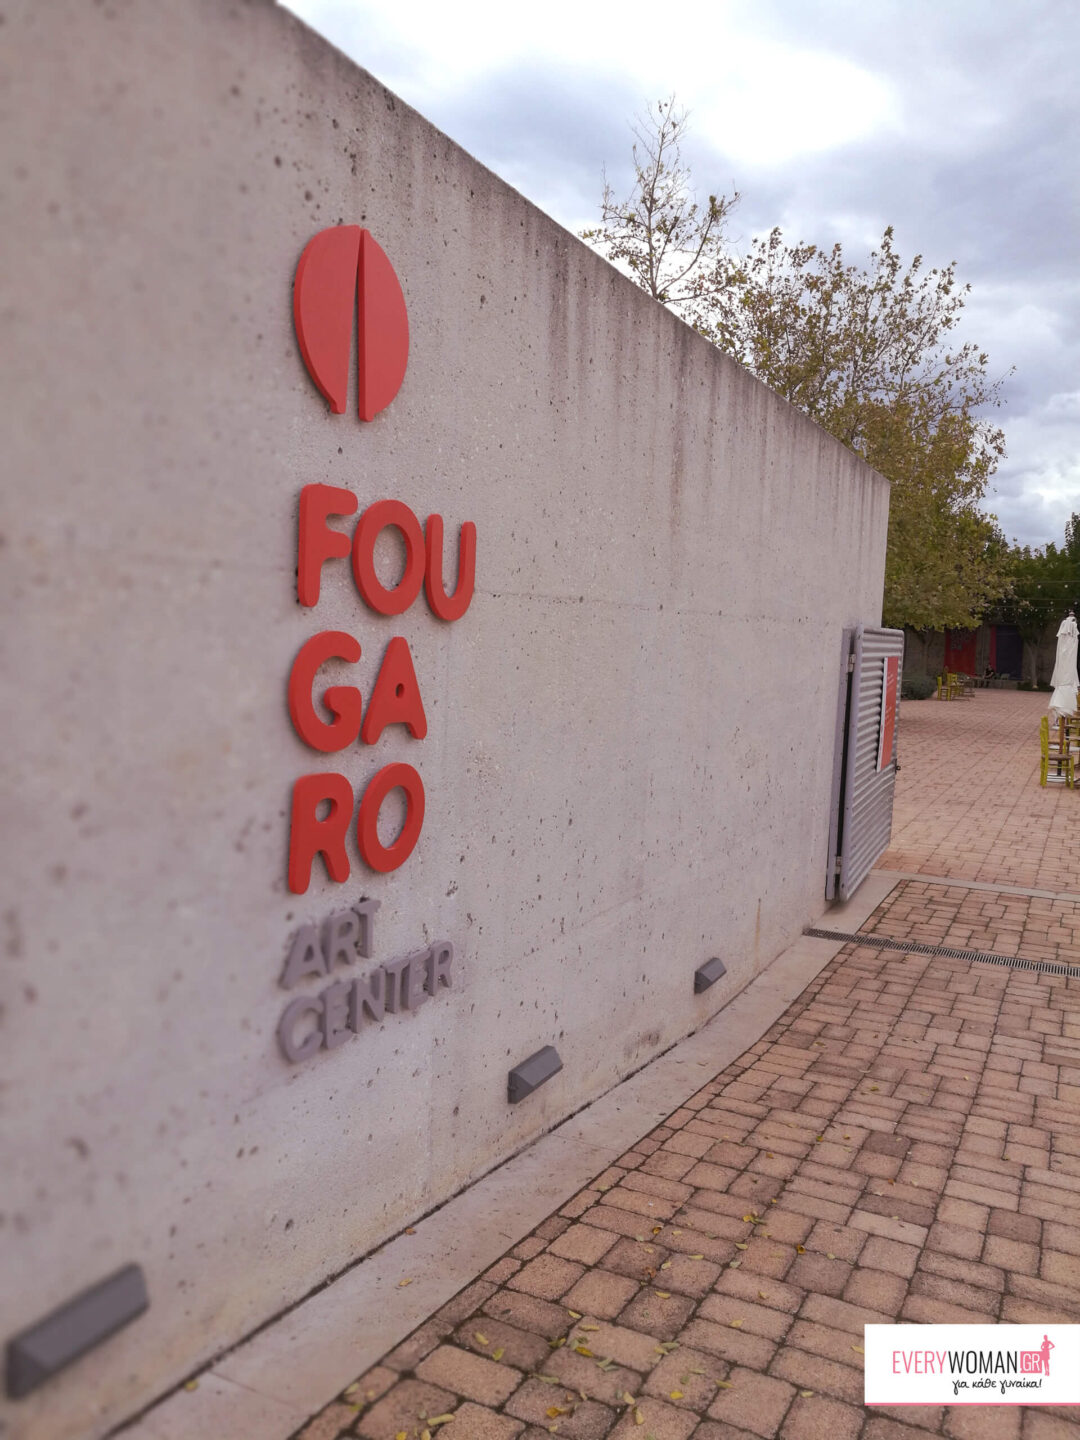 Fougaro Art Center – ένας πολυχώρος γεμάτος τέχνη!